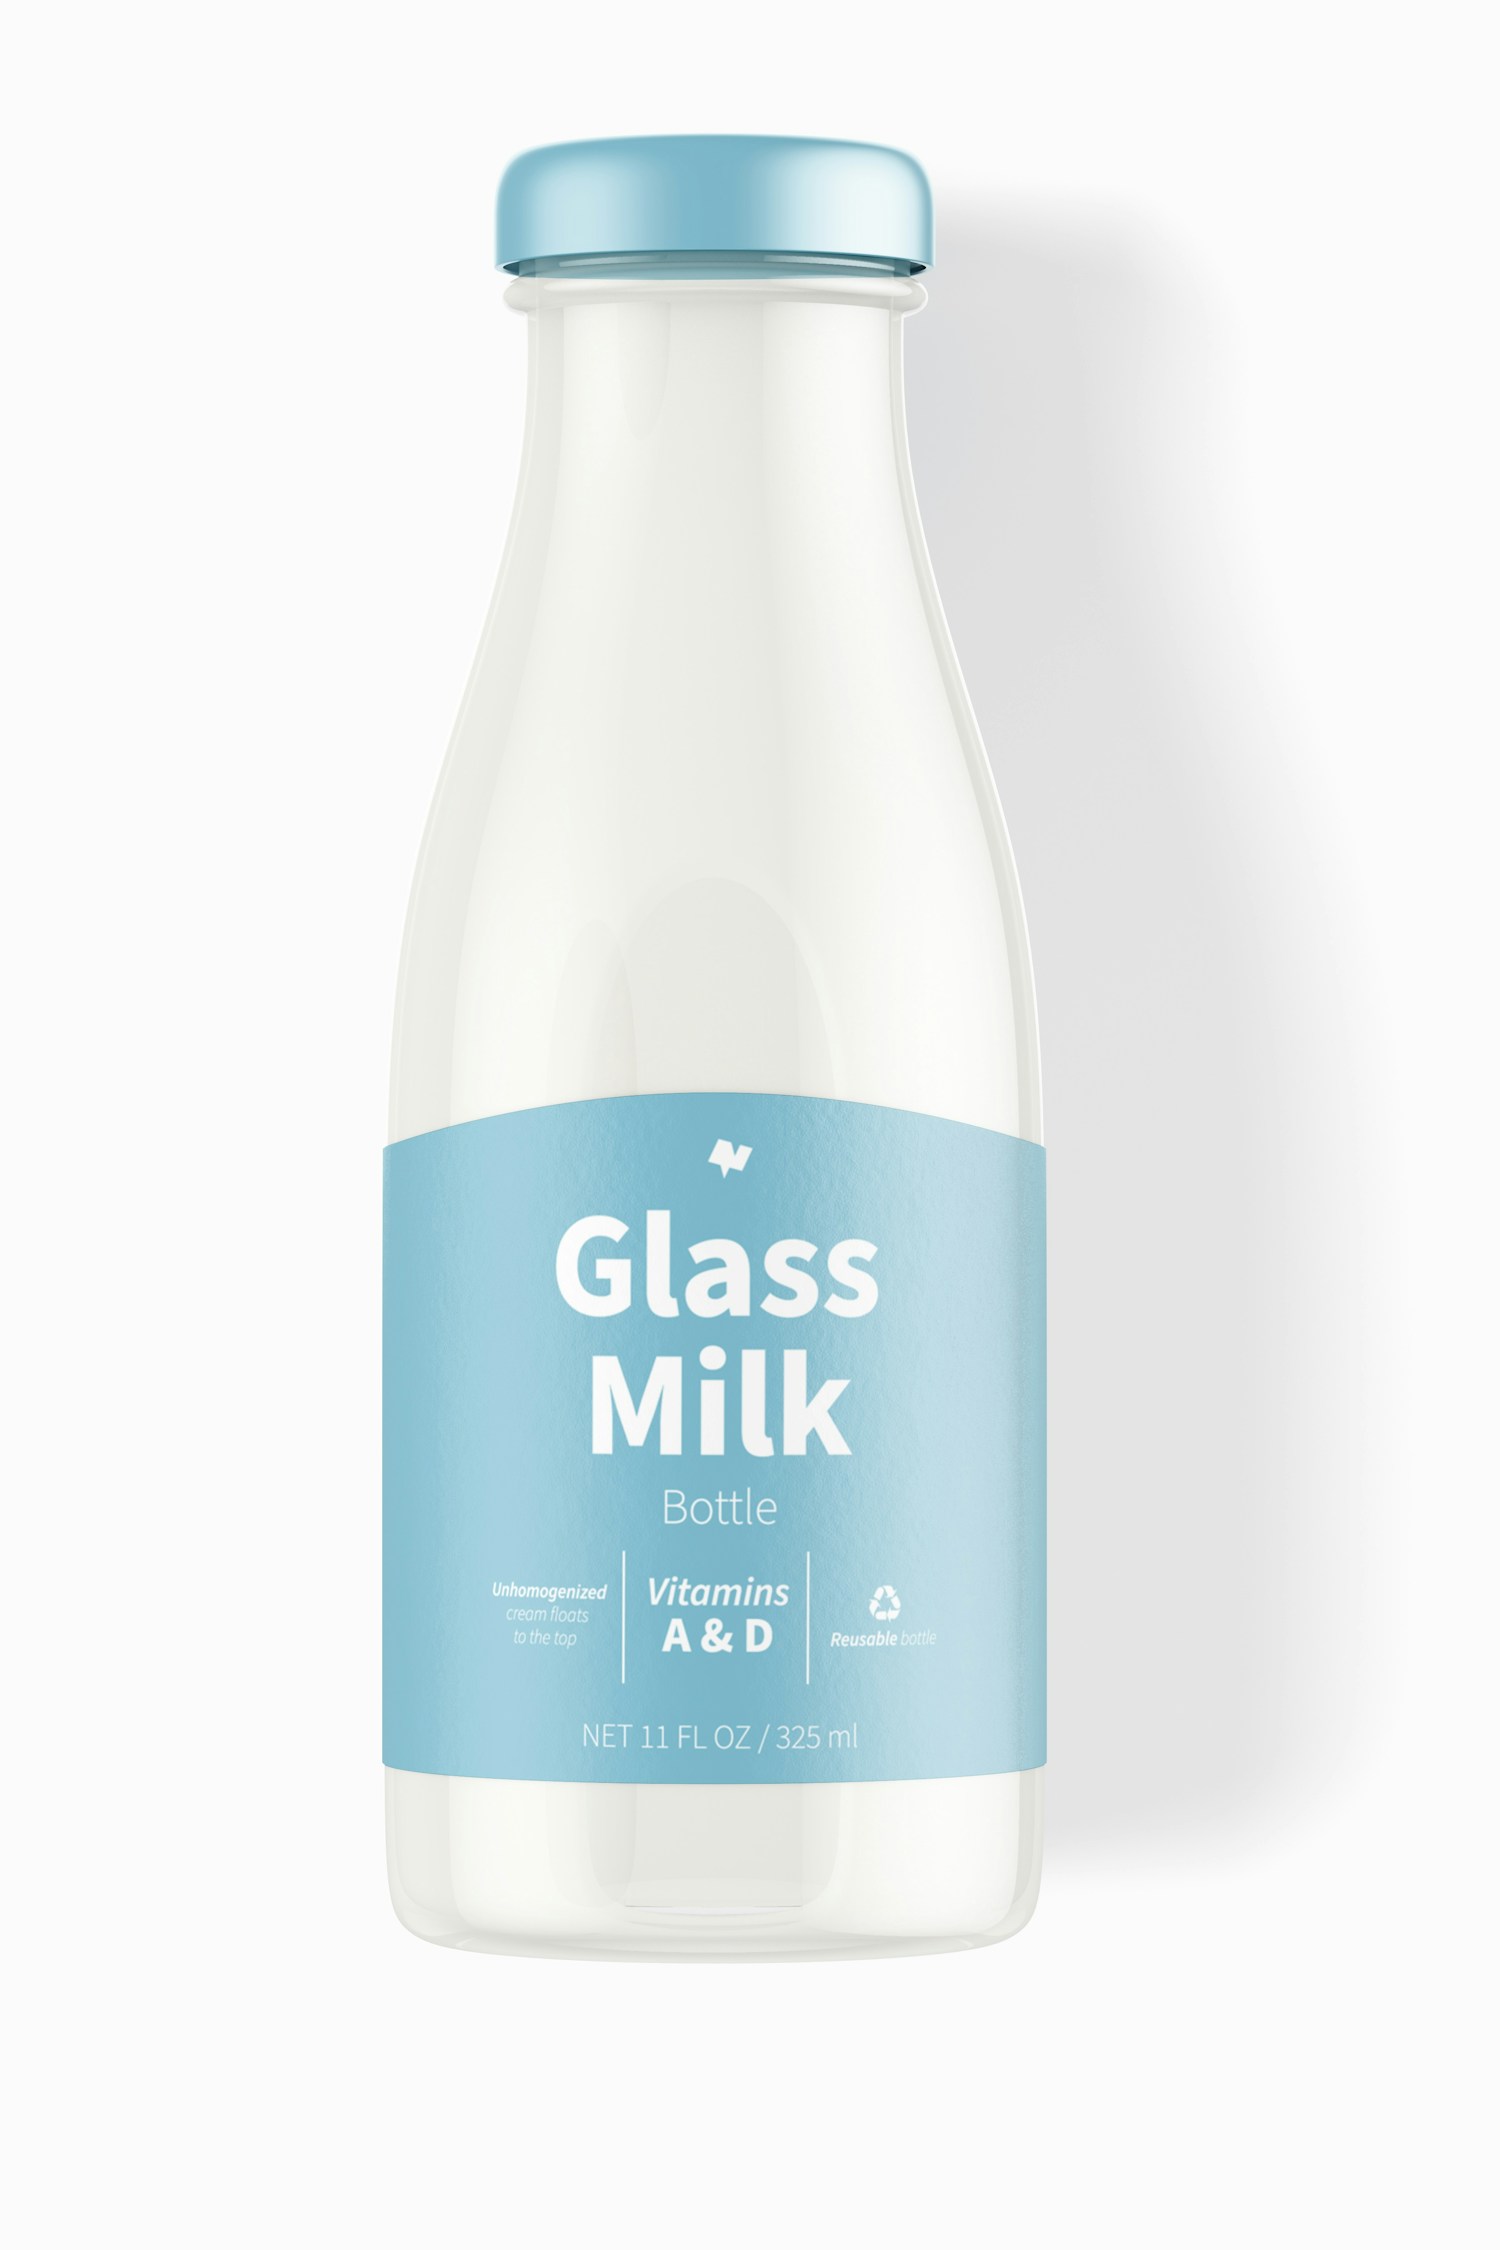 11 oz Glass Milk Bottle Mockup, Top View